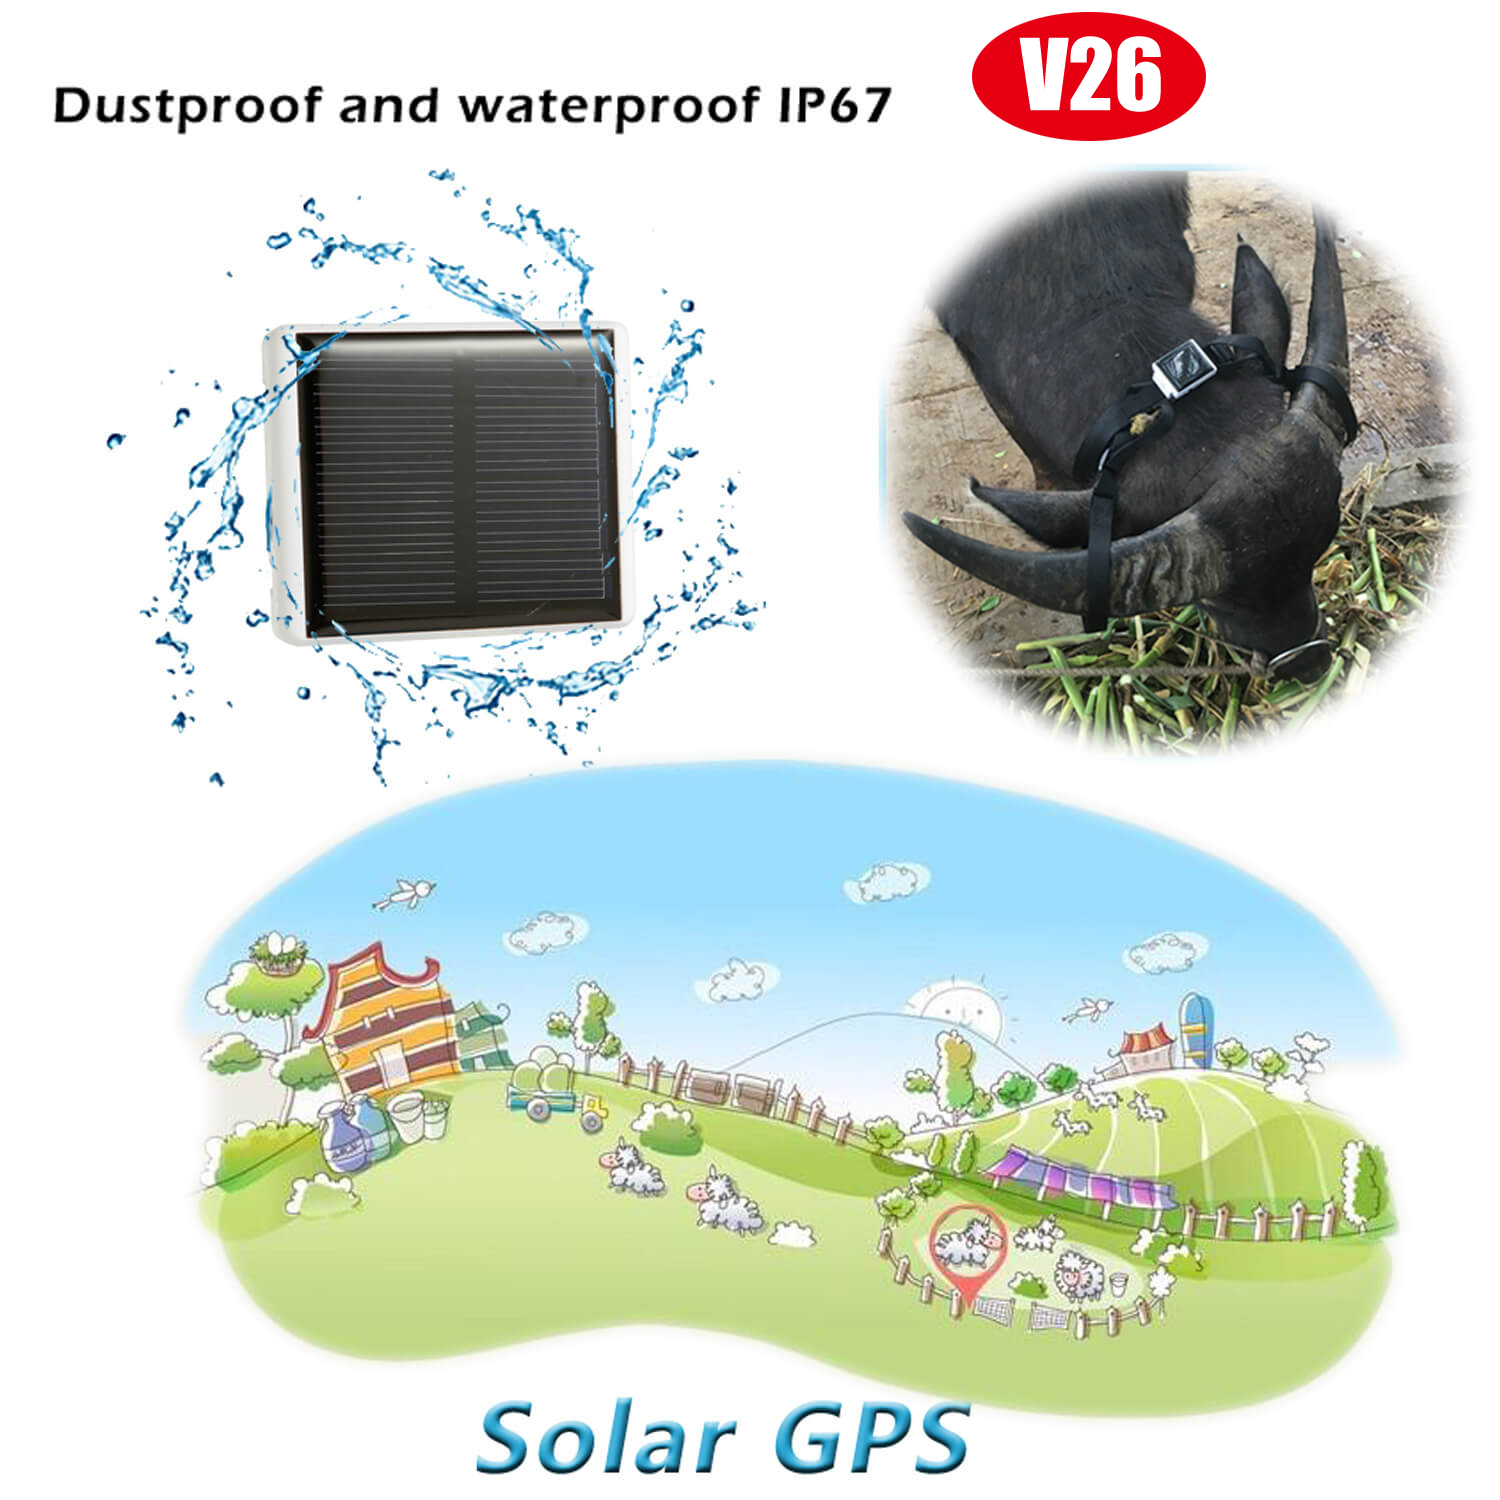 High Quality GSM Solar-Powered GPS Tracker for Pet Cow V26